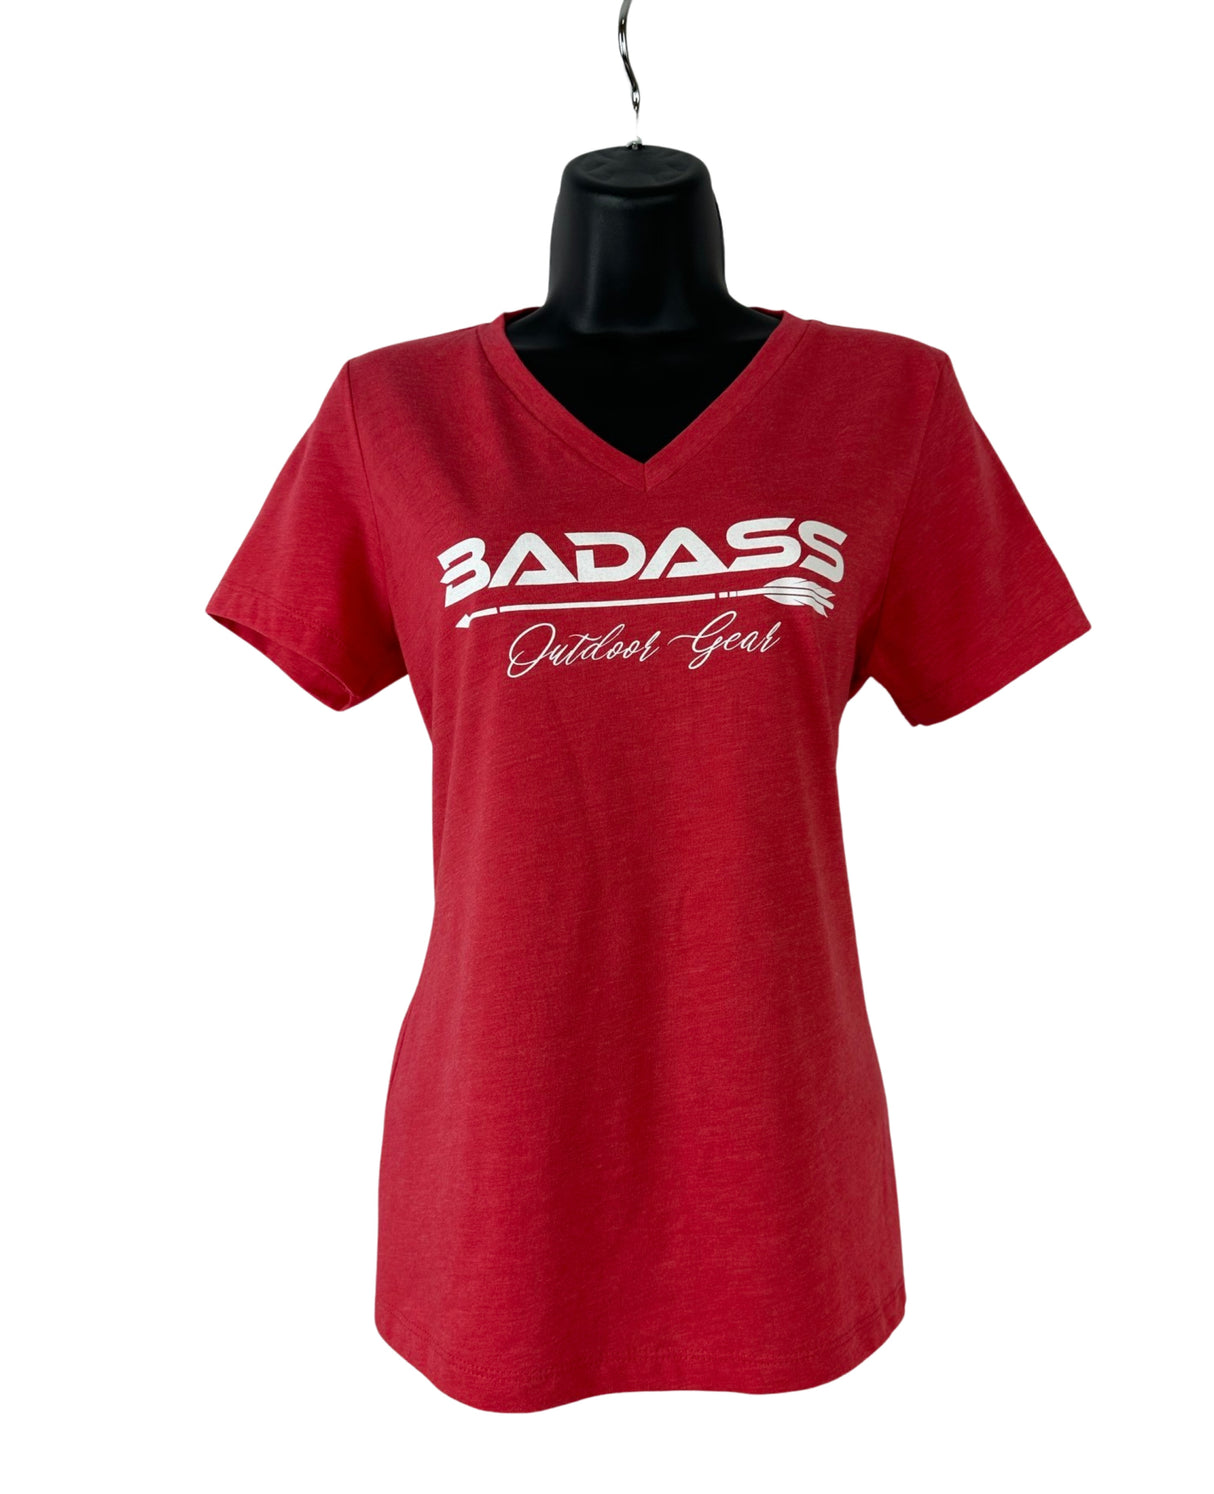 Badass Outdoor Gear Ladies Arrow Tee